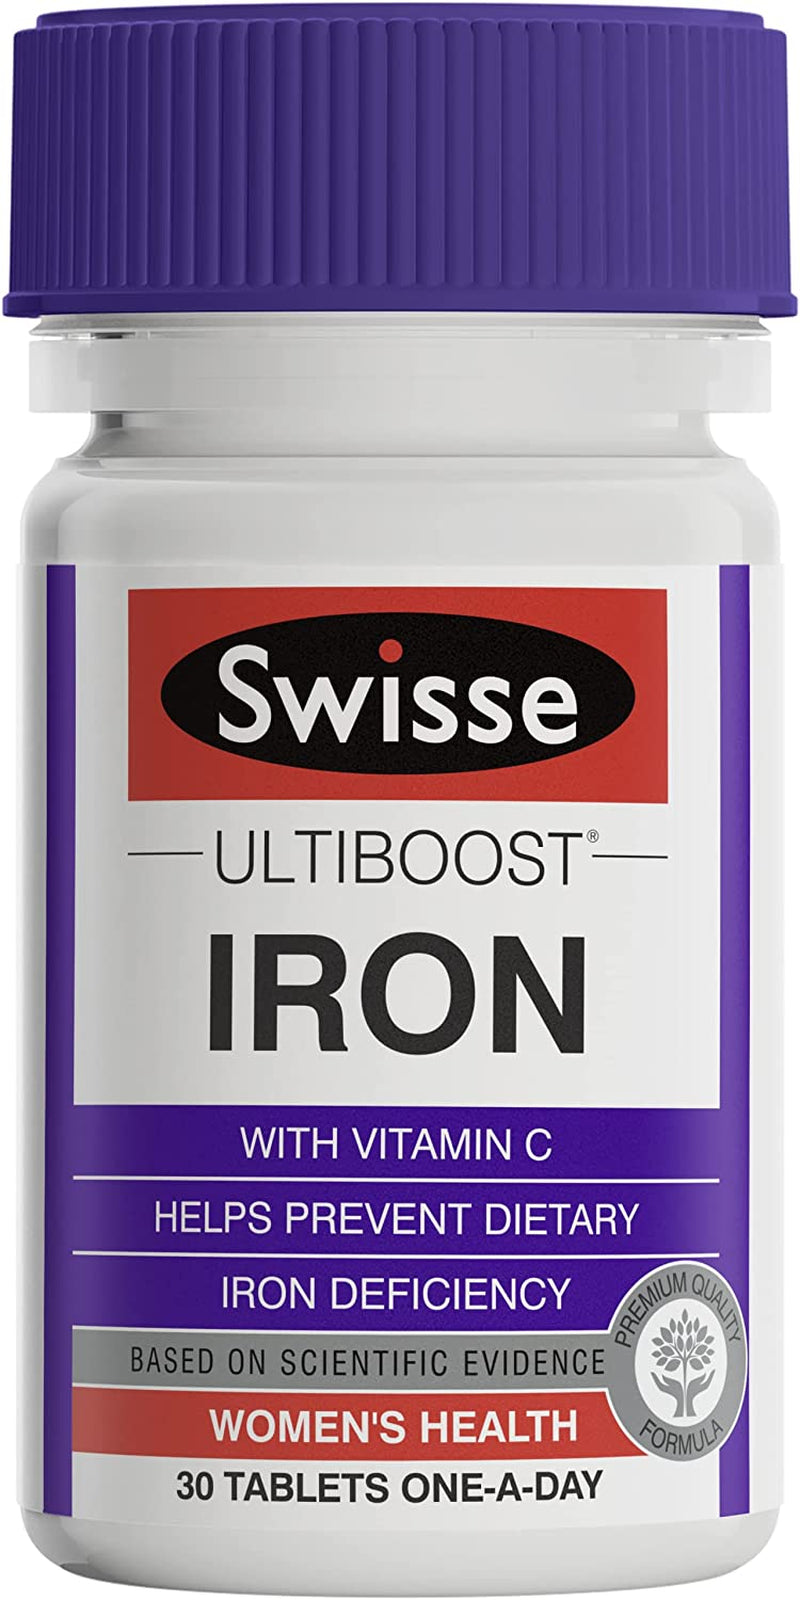 Ultiboost Iron, 30 Tablets